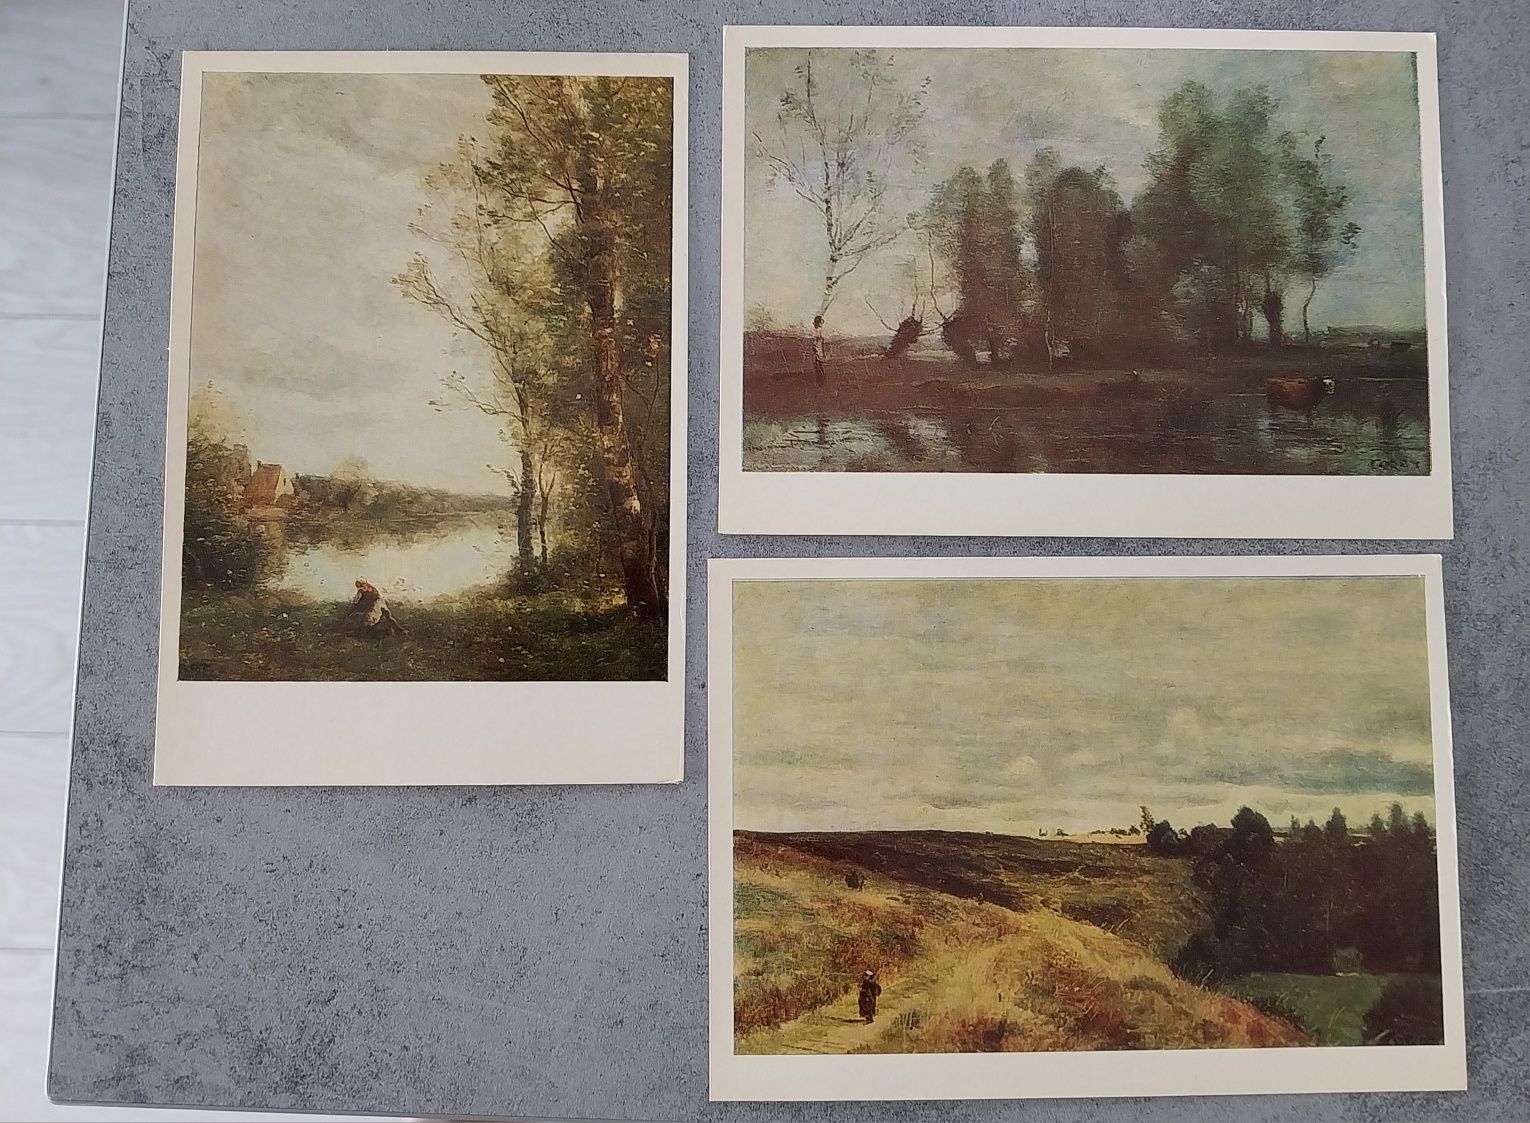 Camille Corot 16 pocztówek